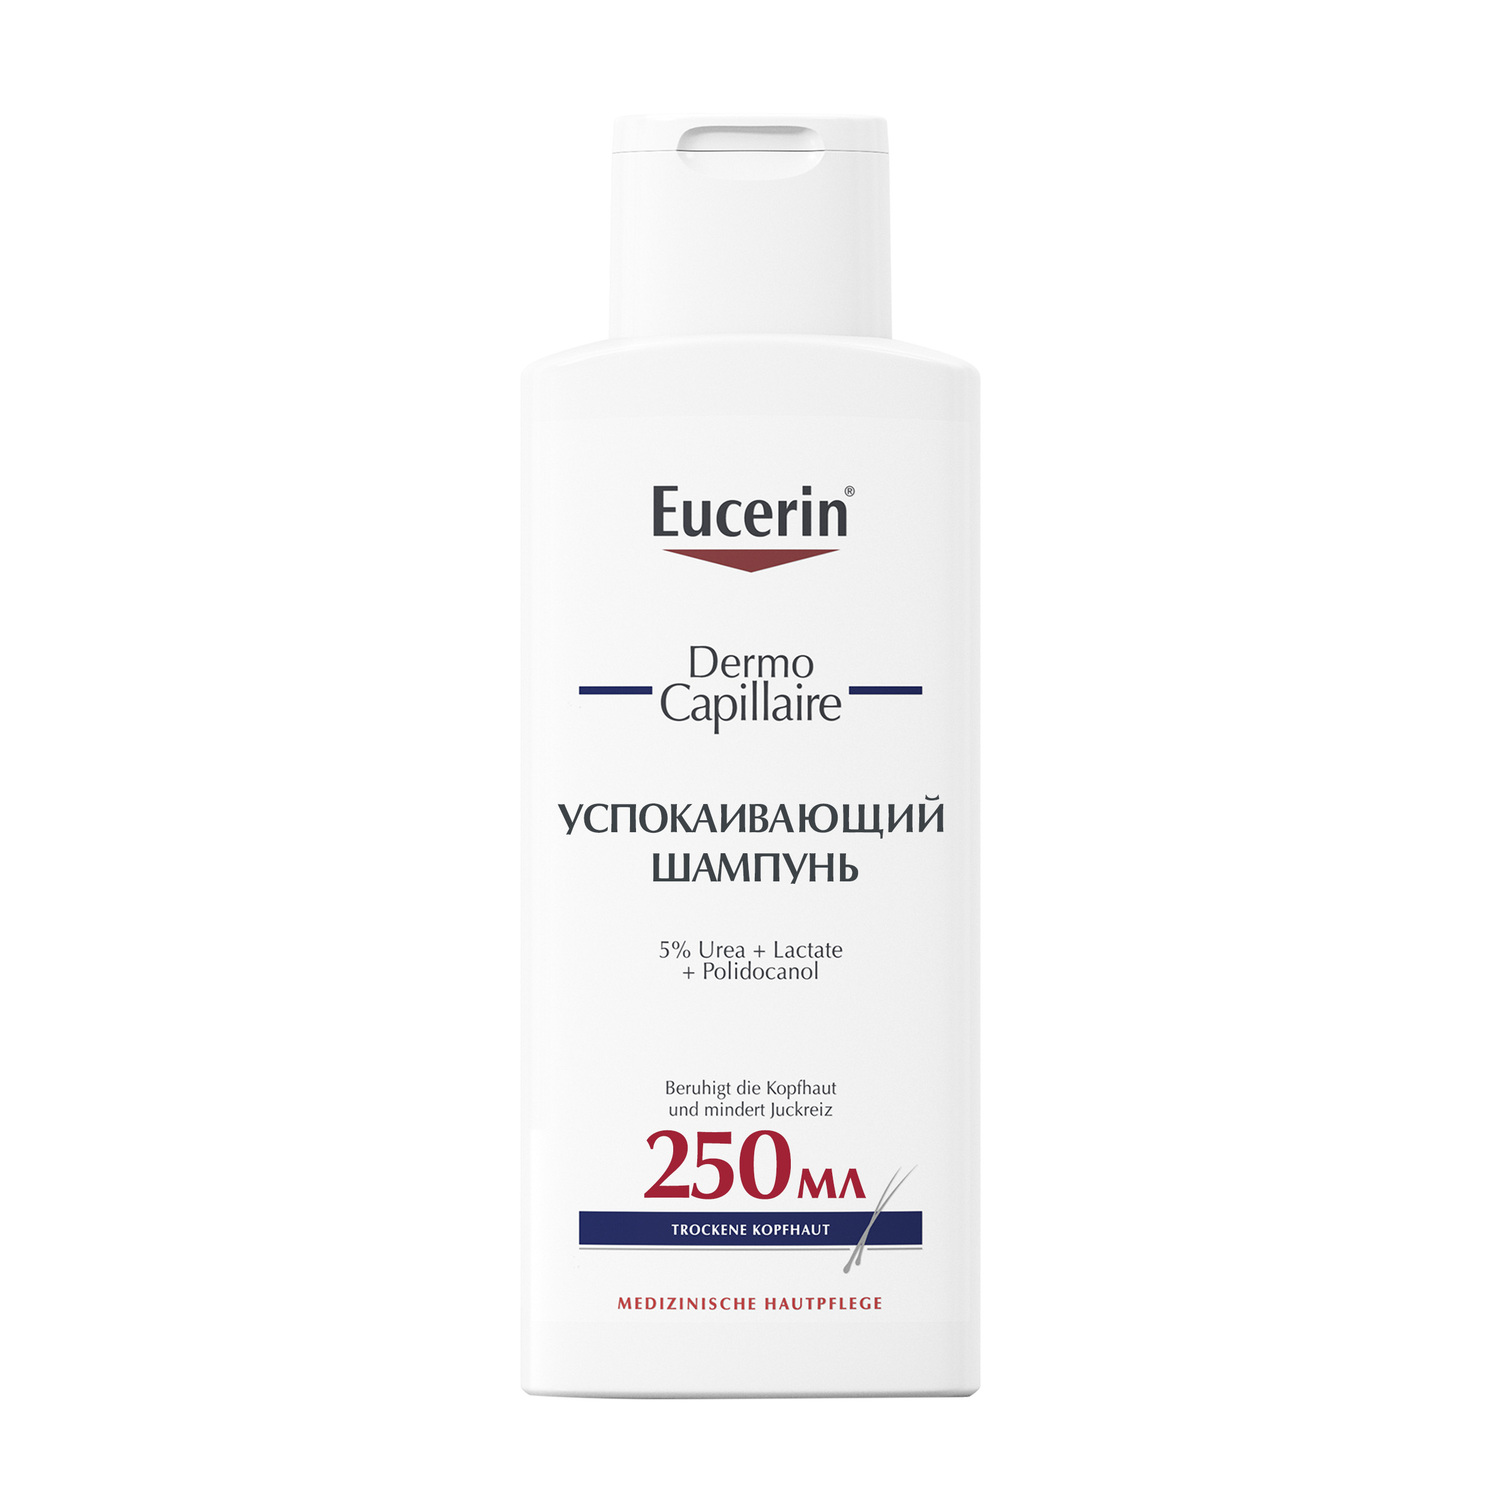 Eucerin Успокаивающий шампунь для взрослых и детей, 250 мл (Eucerin, DermoCapillaire)